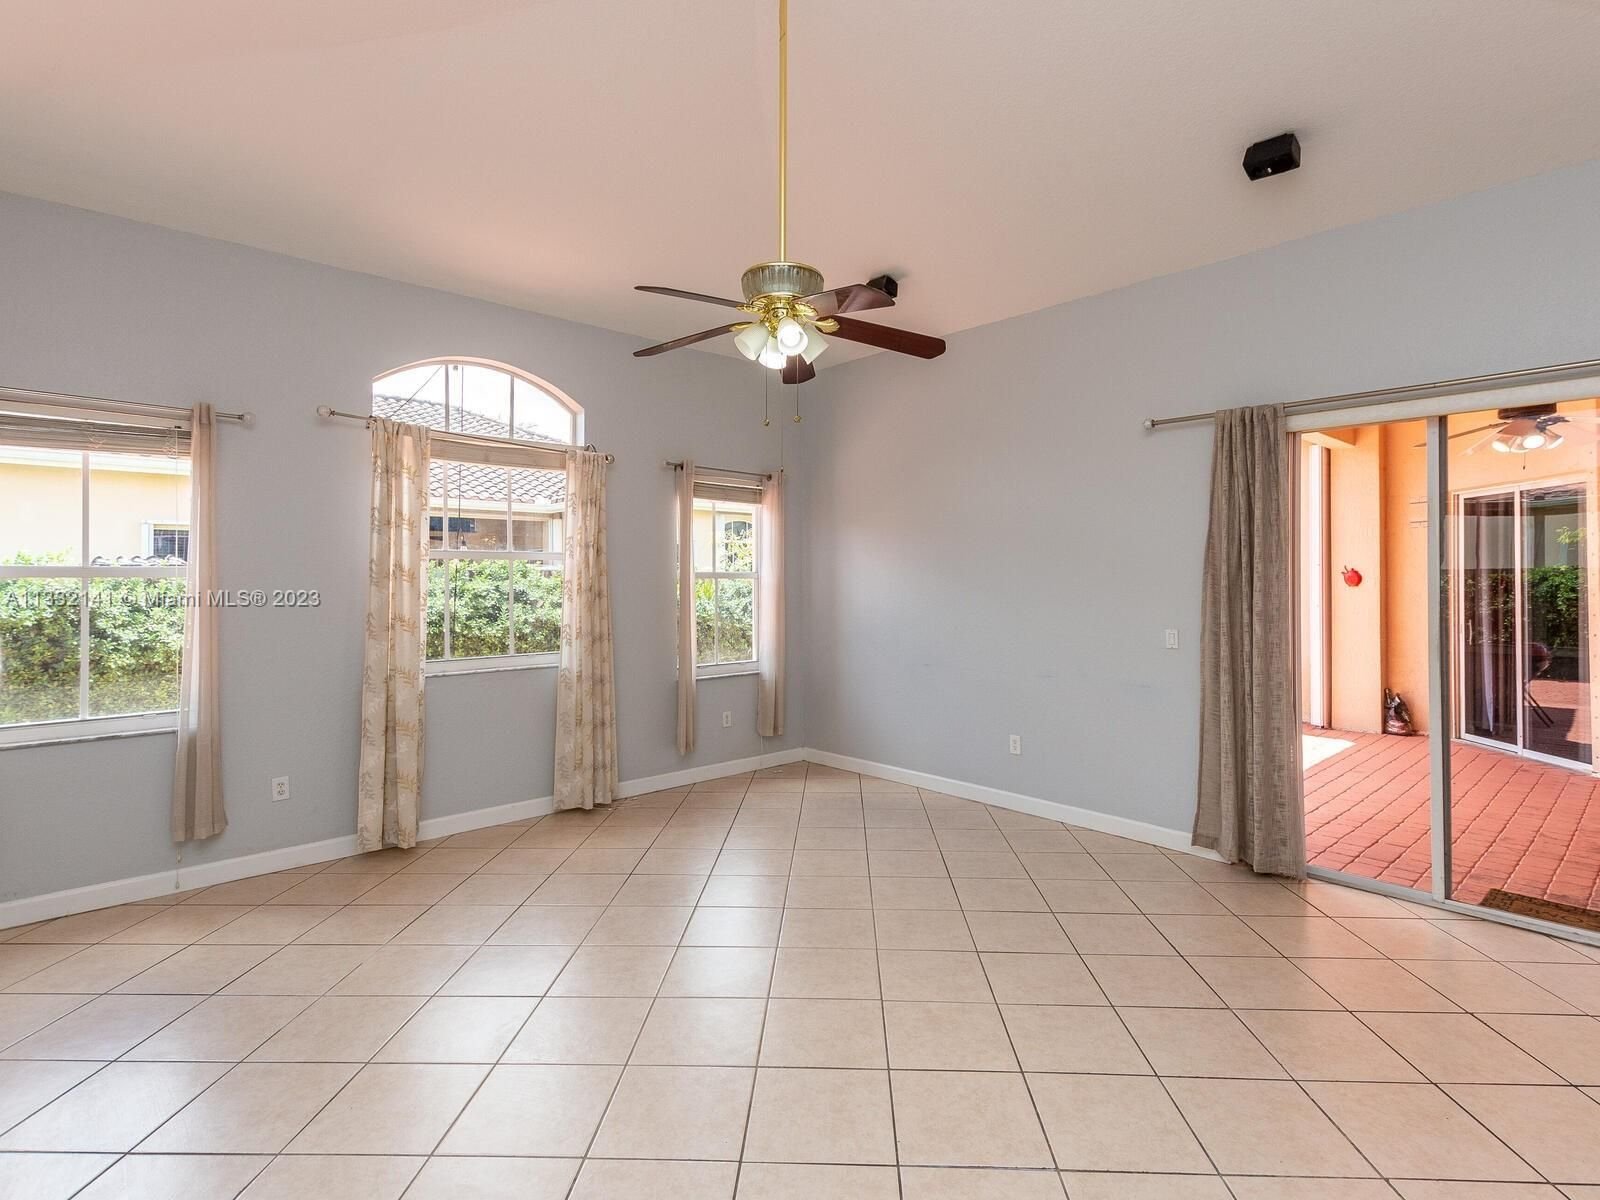 Real estate property located at 16230 36th St, Broward County, Miramar, FL